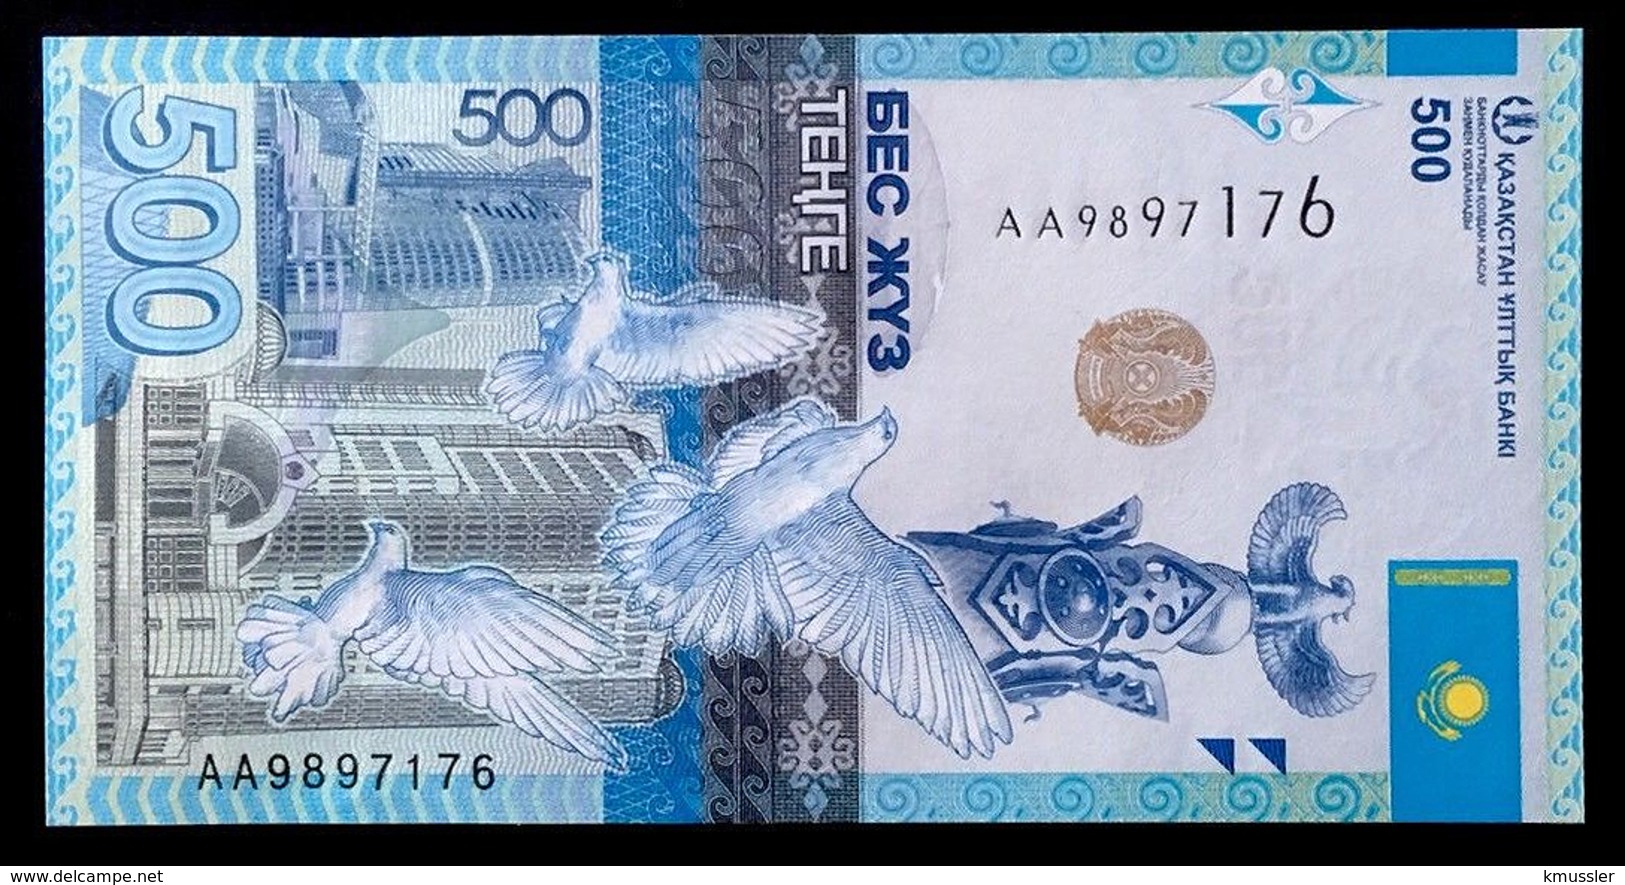 # # # Banknote Kasachstan 500 Tenge UNC # # # - Kazakhstan